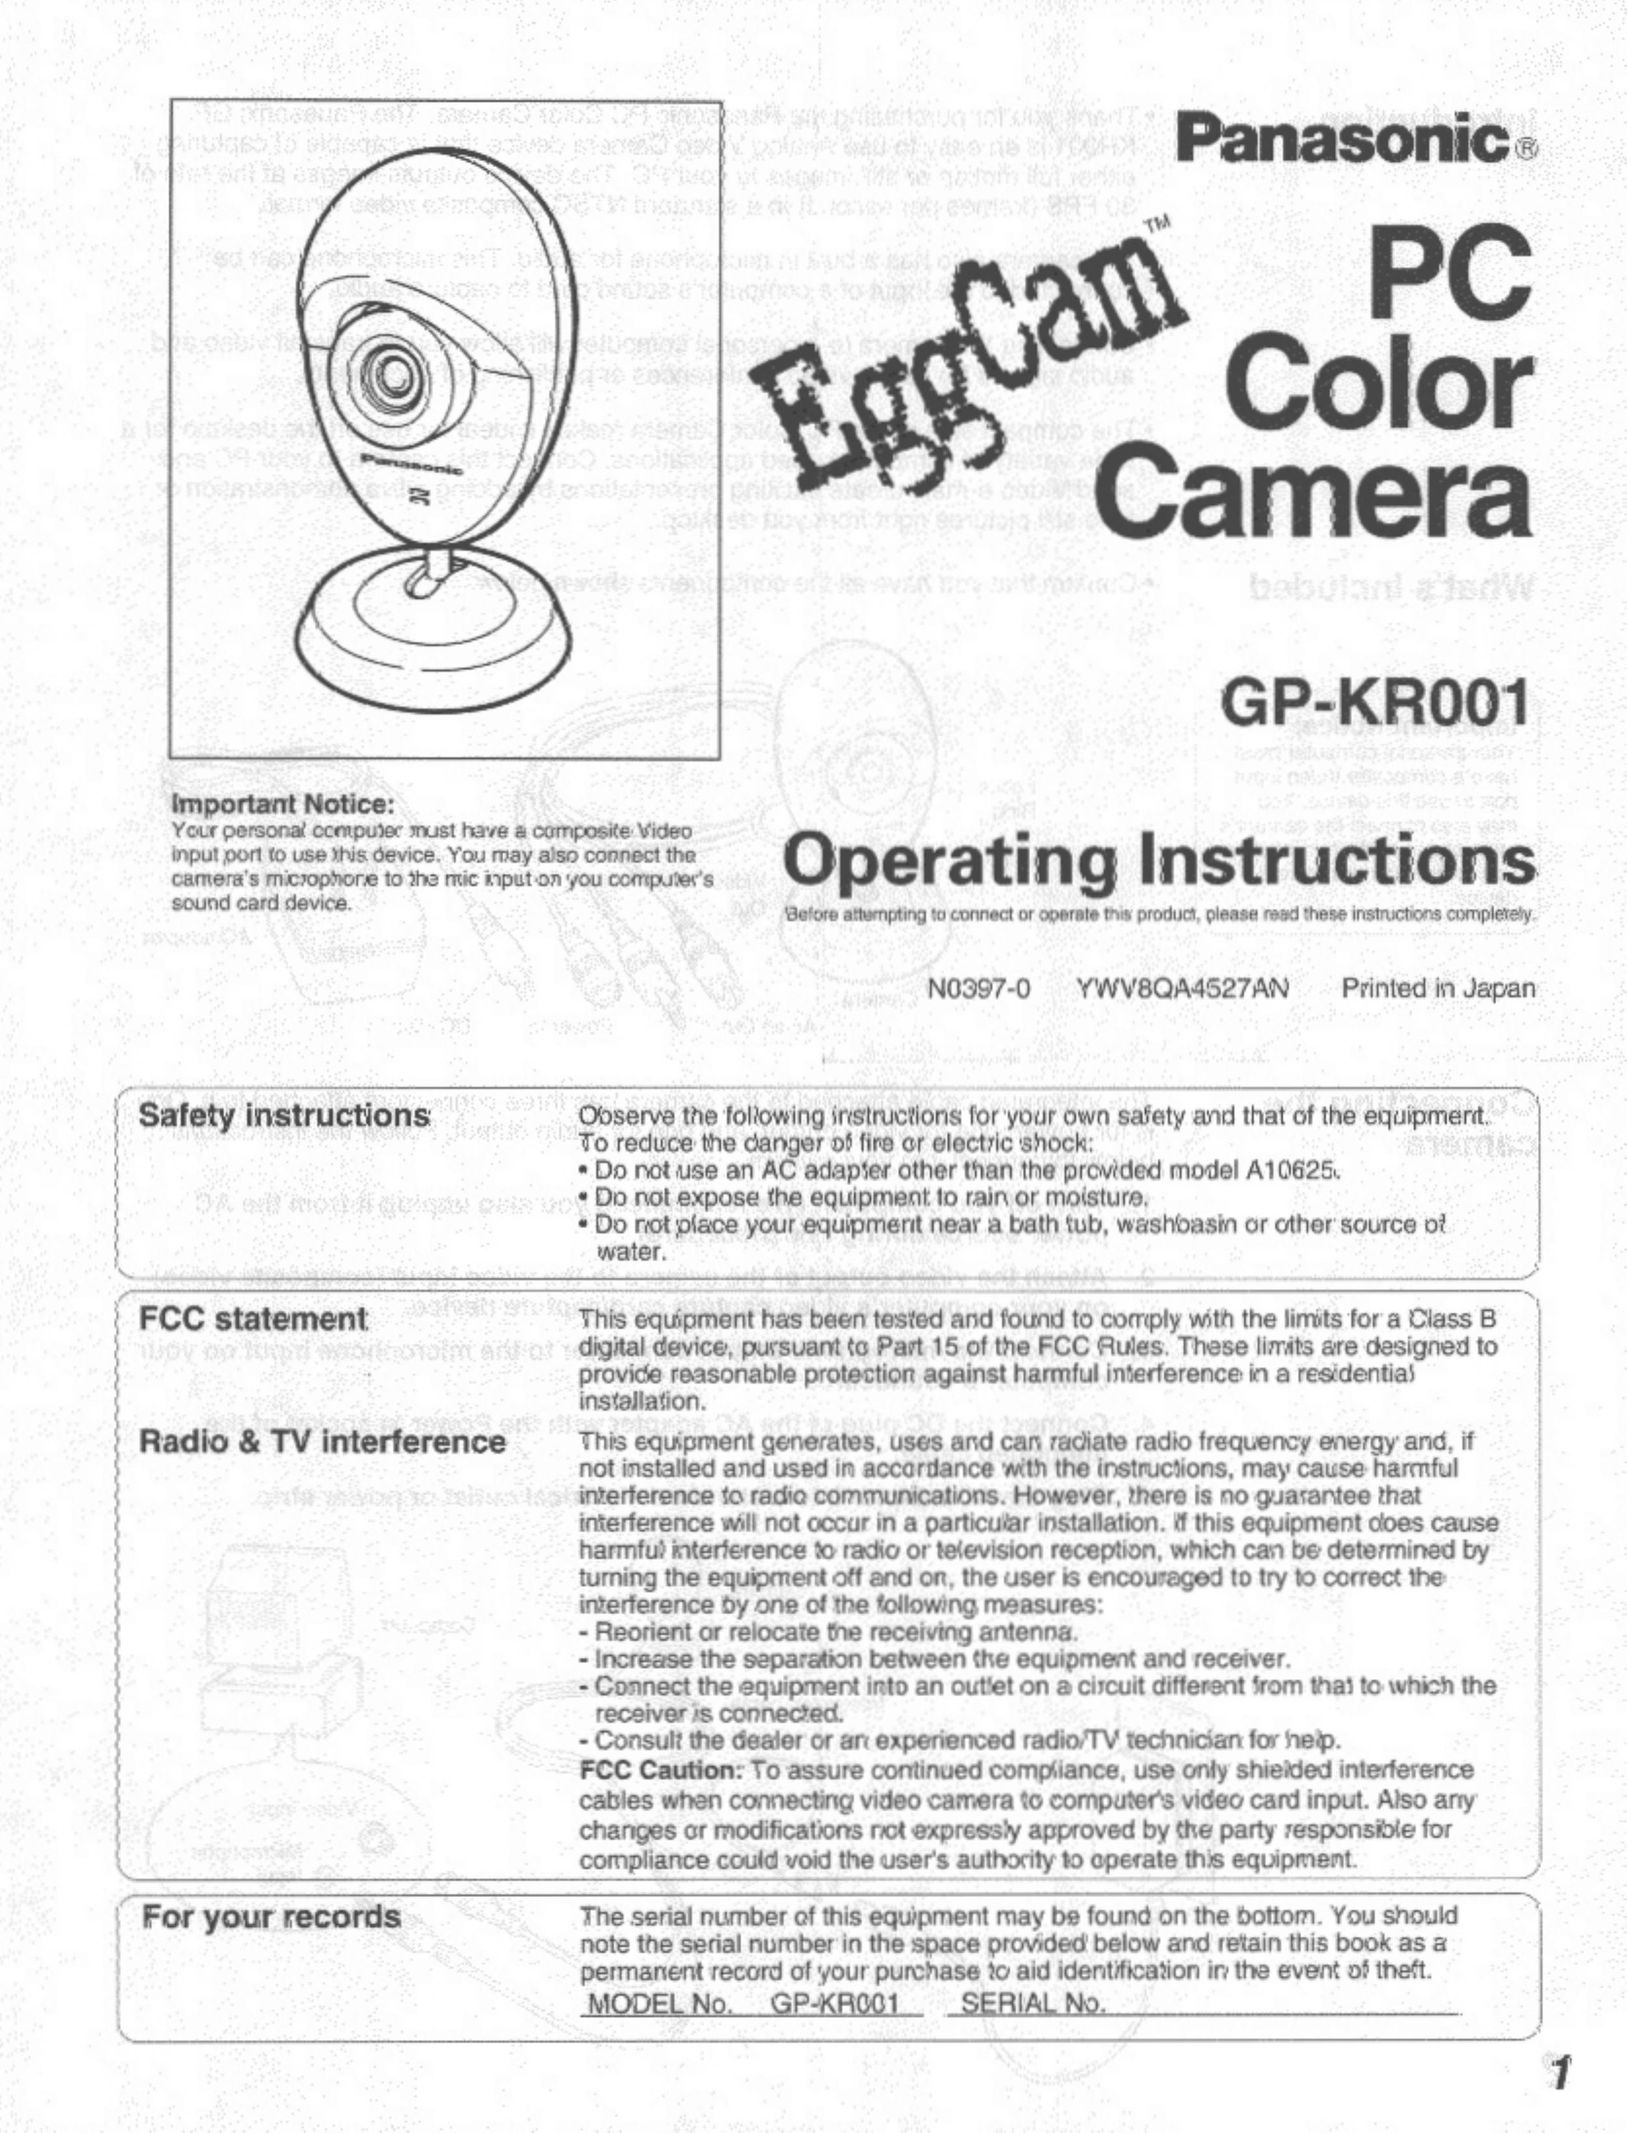 Panasonic GP-KR001 Webcam User Manual